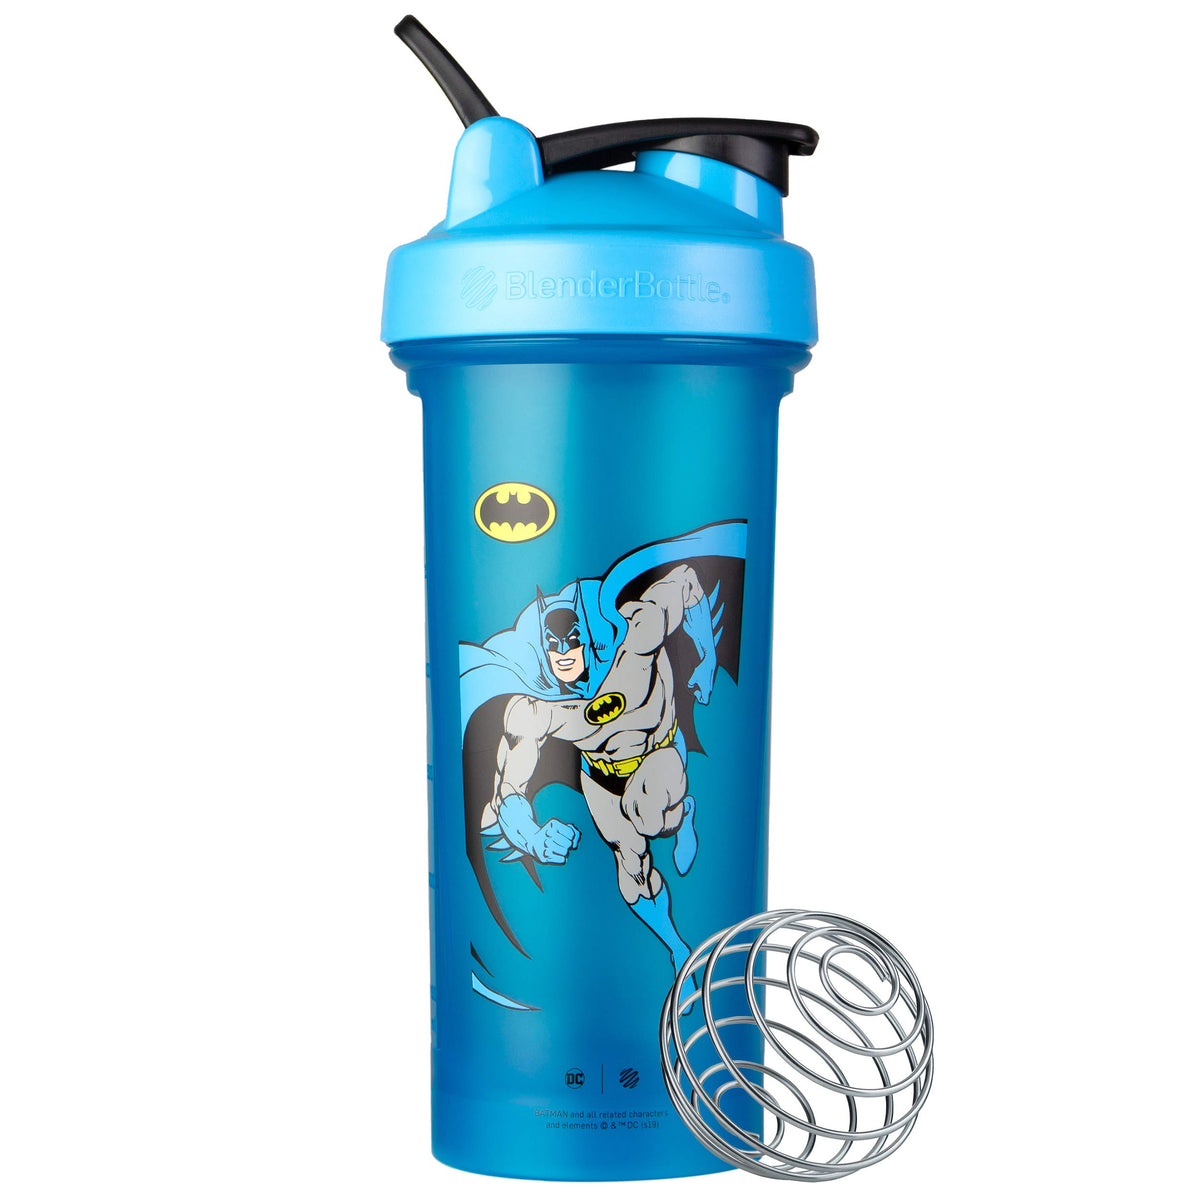  Paladone Batman Protein Shaker Bottle, 23 oz, Officially  Licensed DC Comics Blender Cup : Home & Kitchen